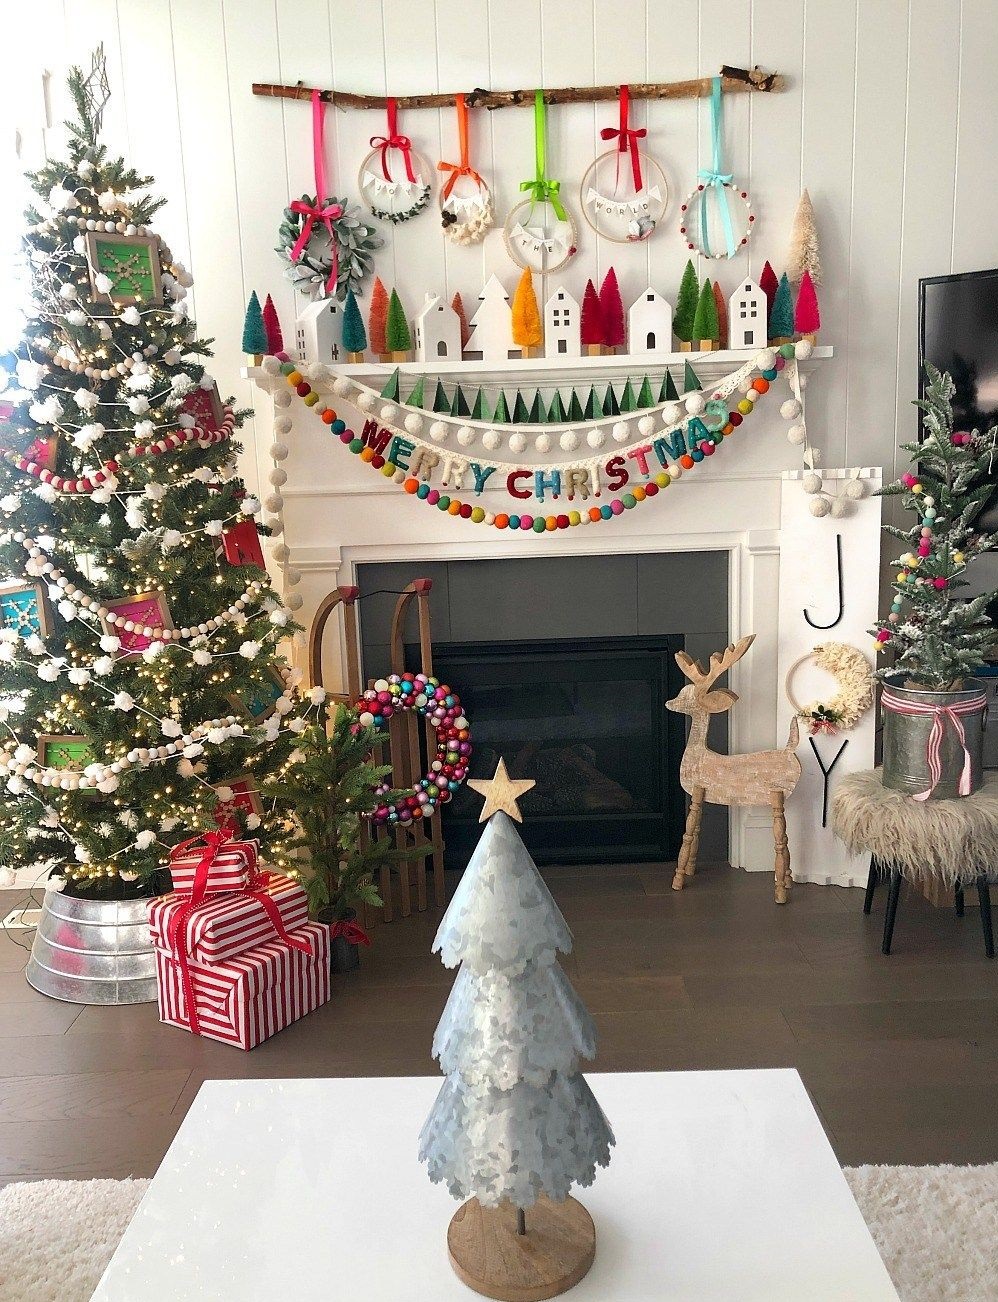 DIY Christmas living room decorations 70+ Creative Christmas Decorations to Do - 56